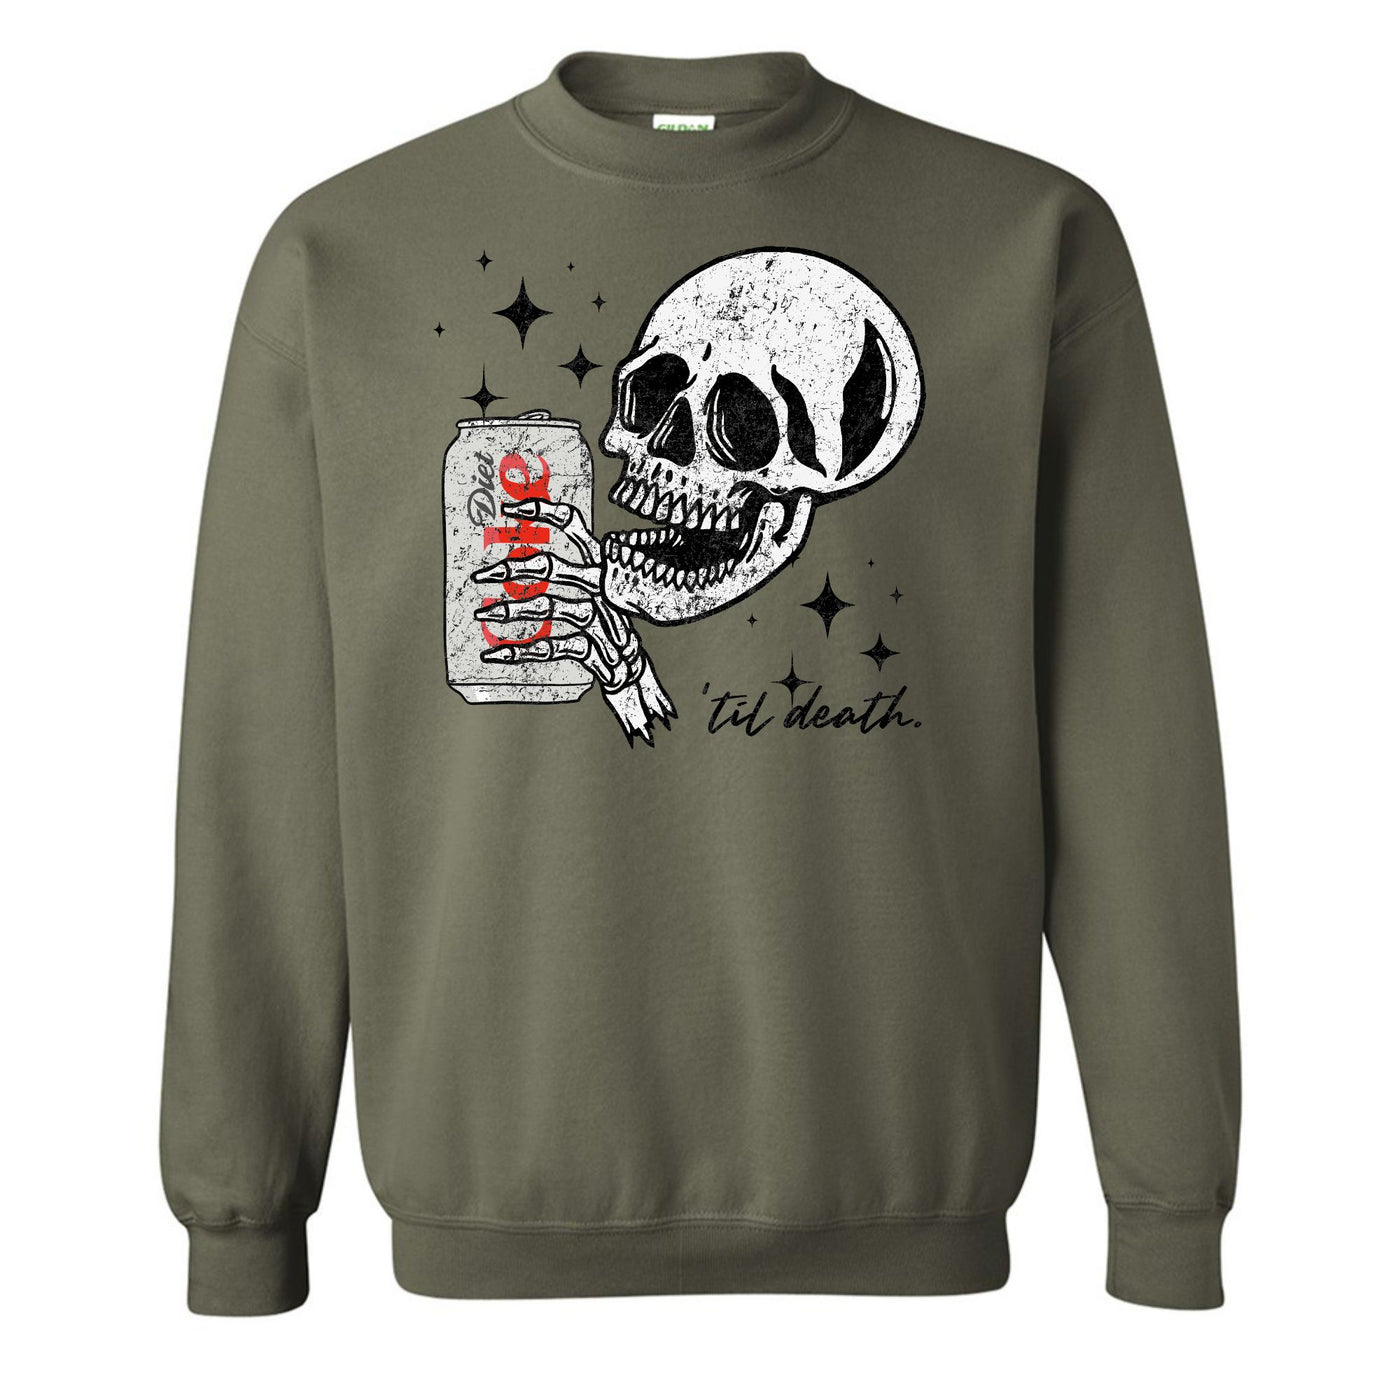 'Til Death Diet Coke' Crewneck Sweatshirt